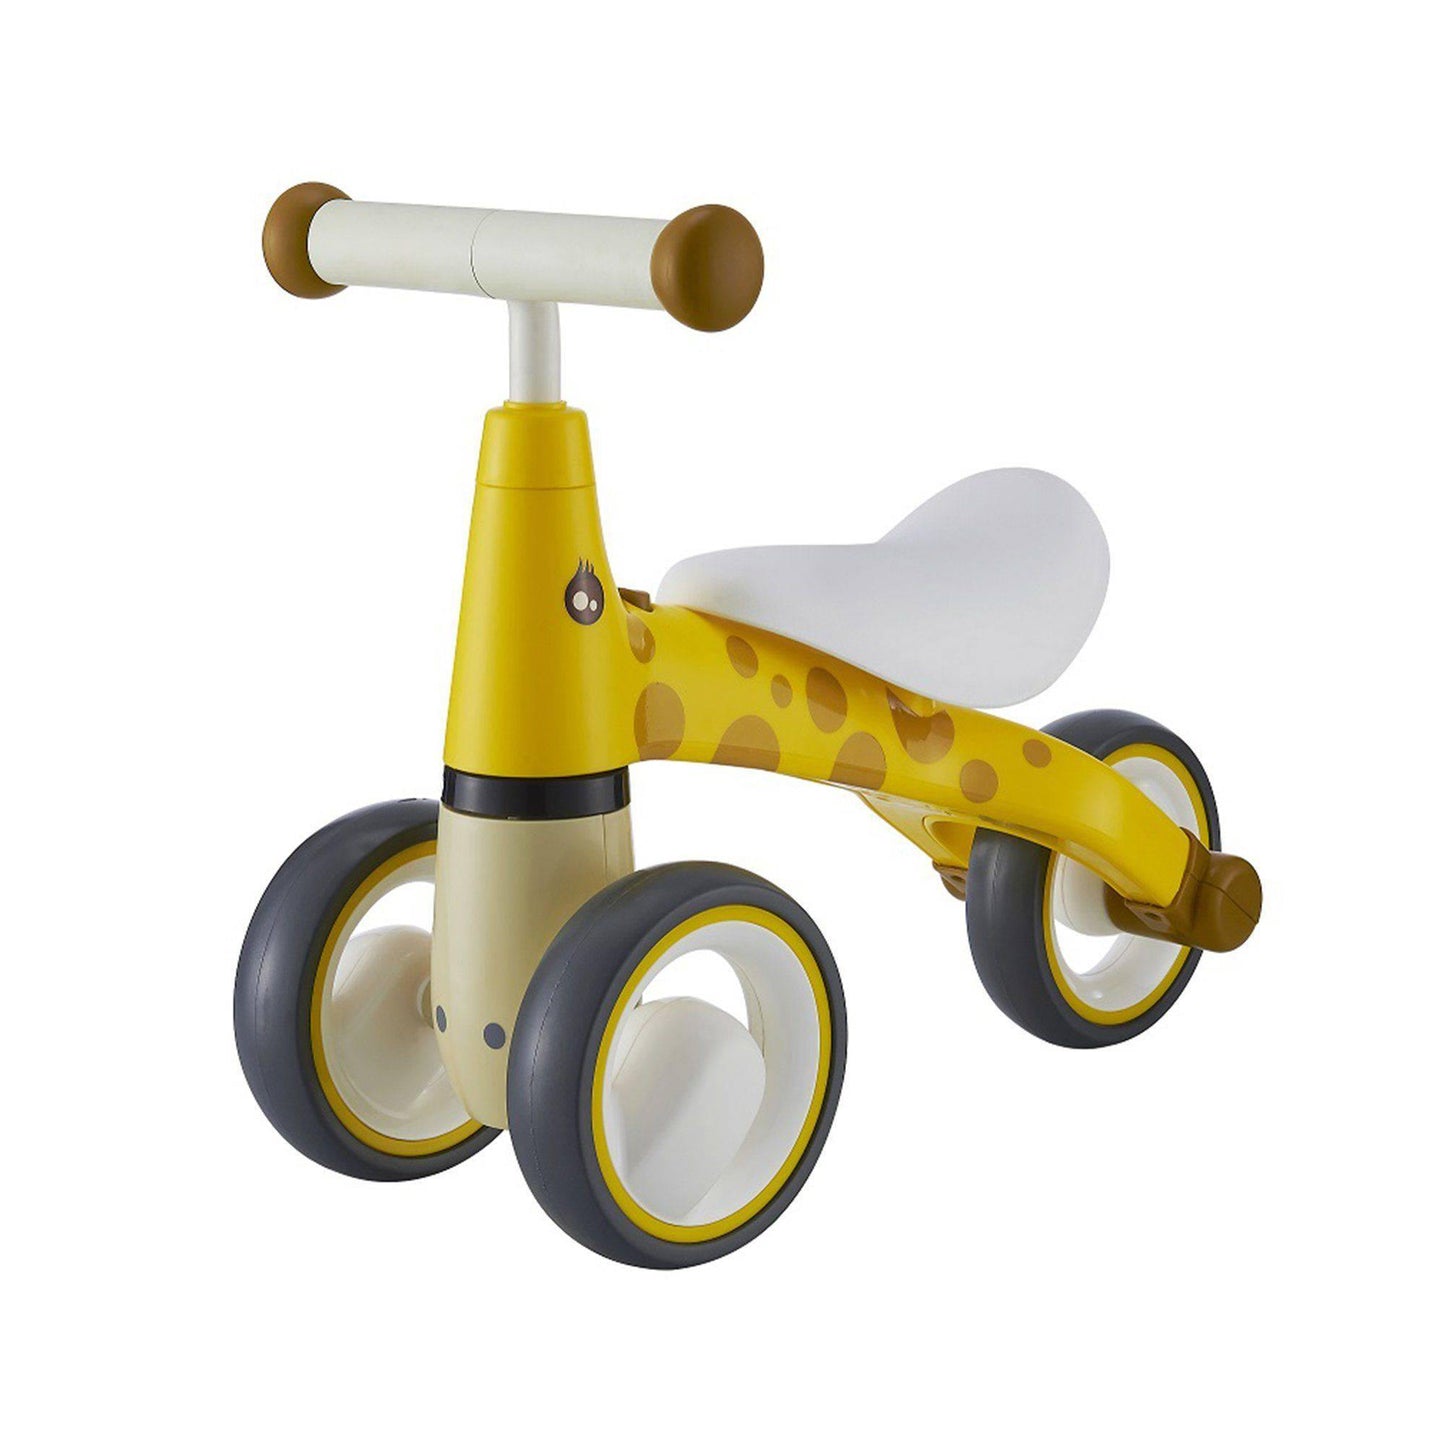 Freddo Toys 3 Wheel Balance Bike